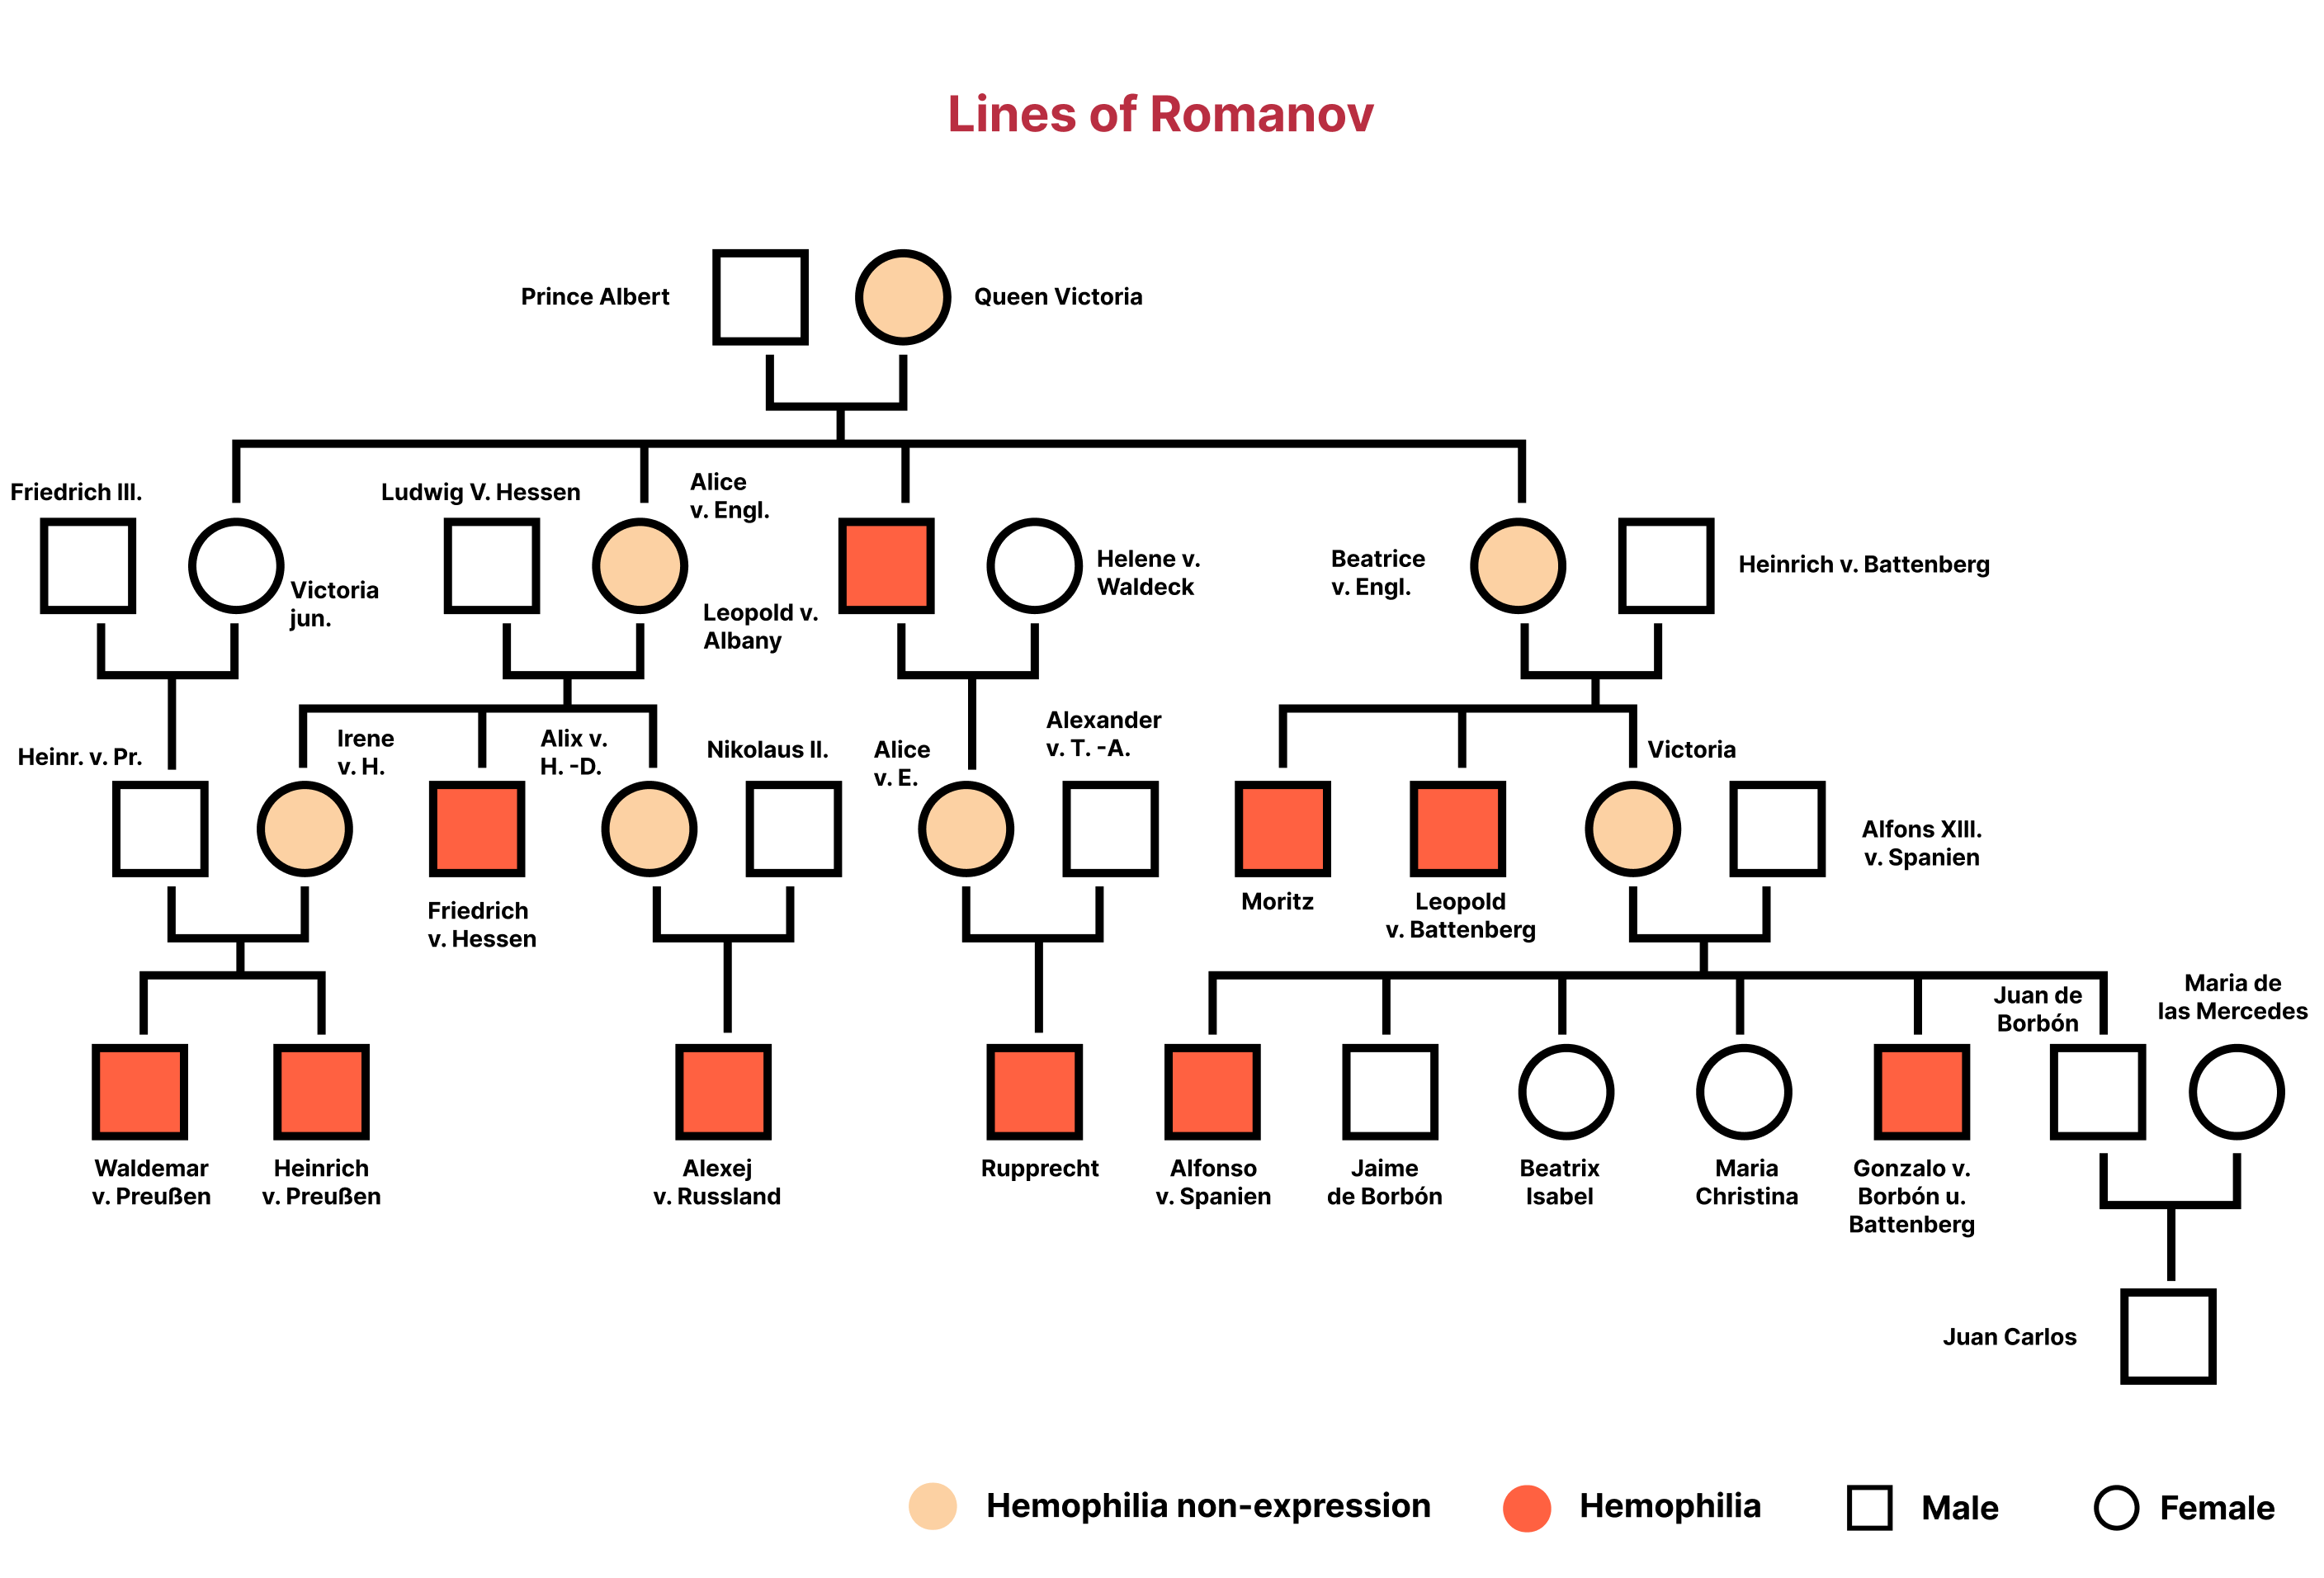 Lines of the Romanovs